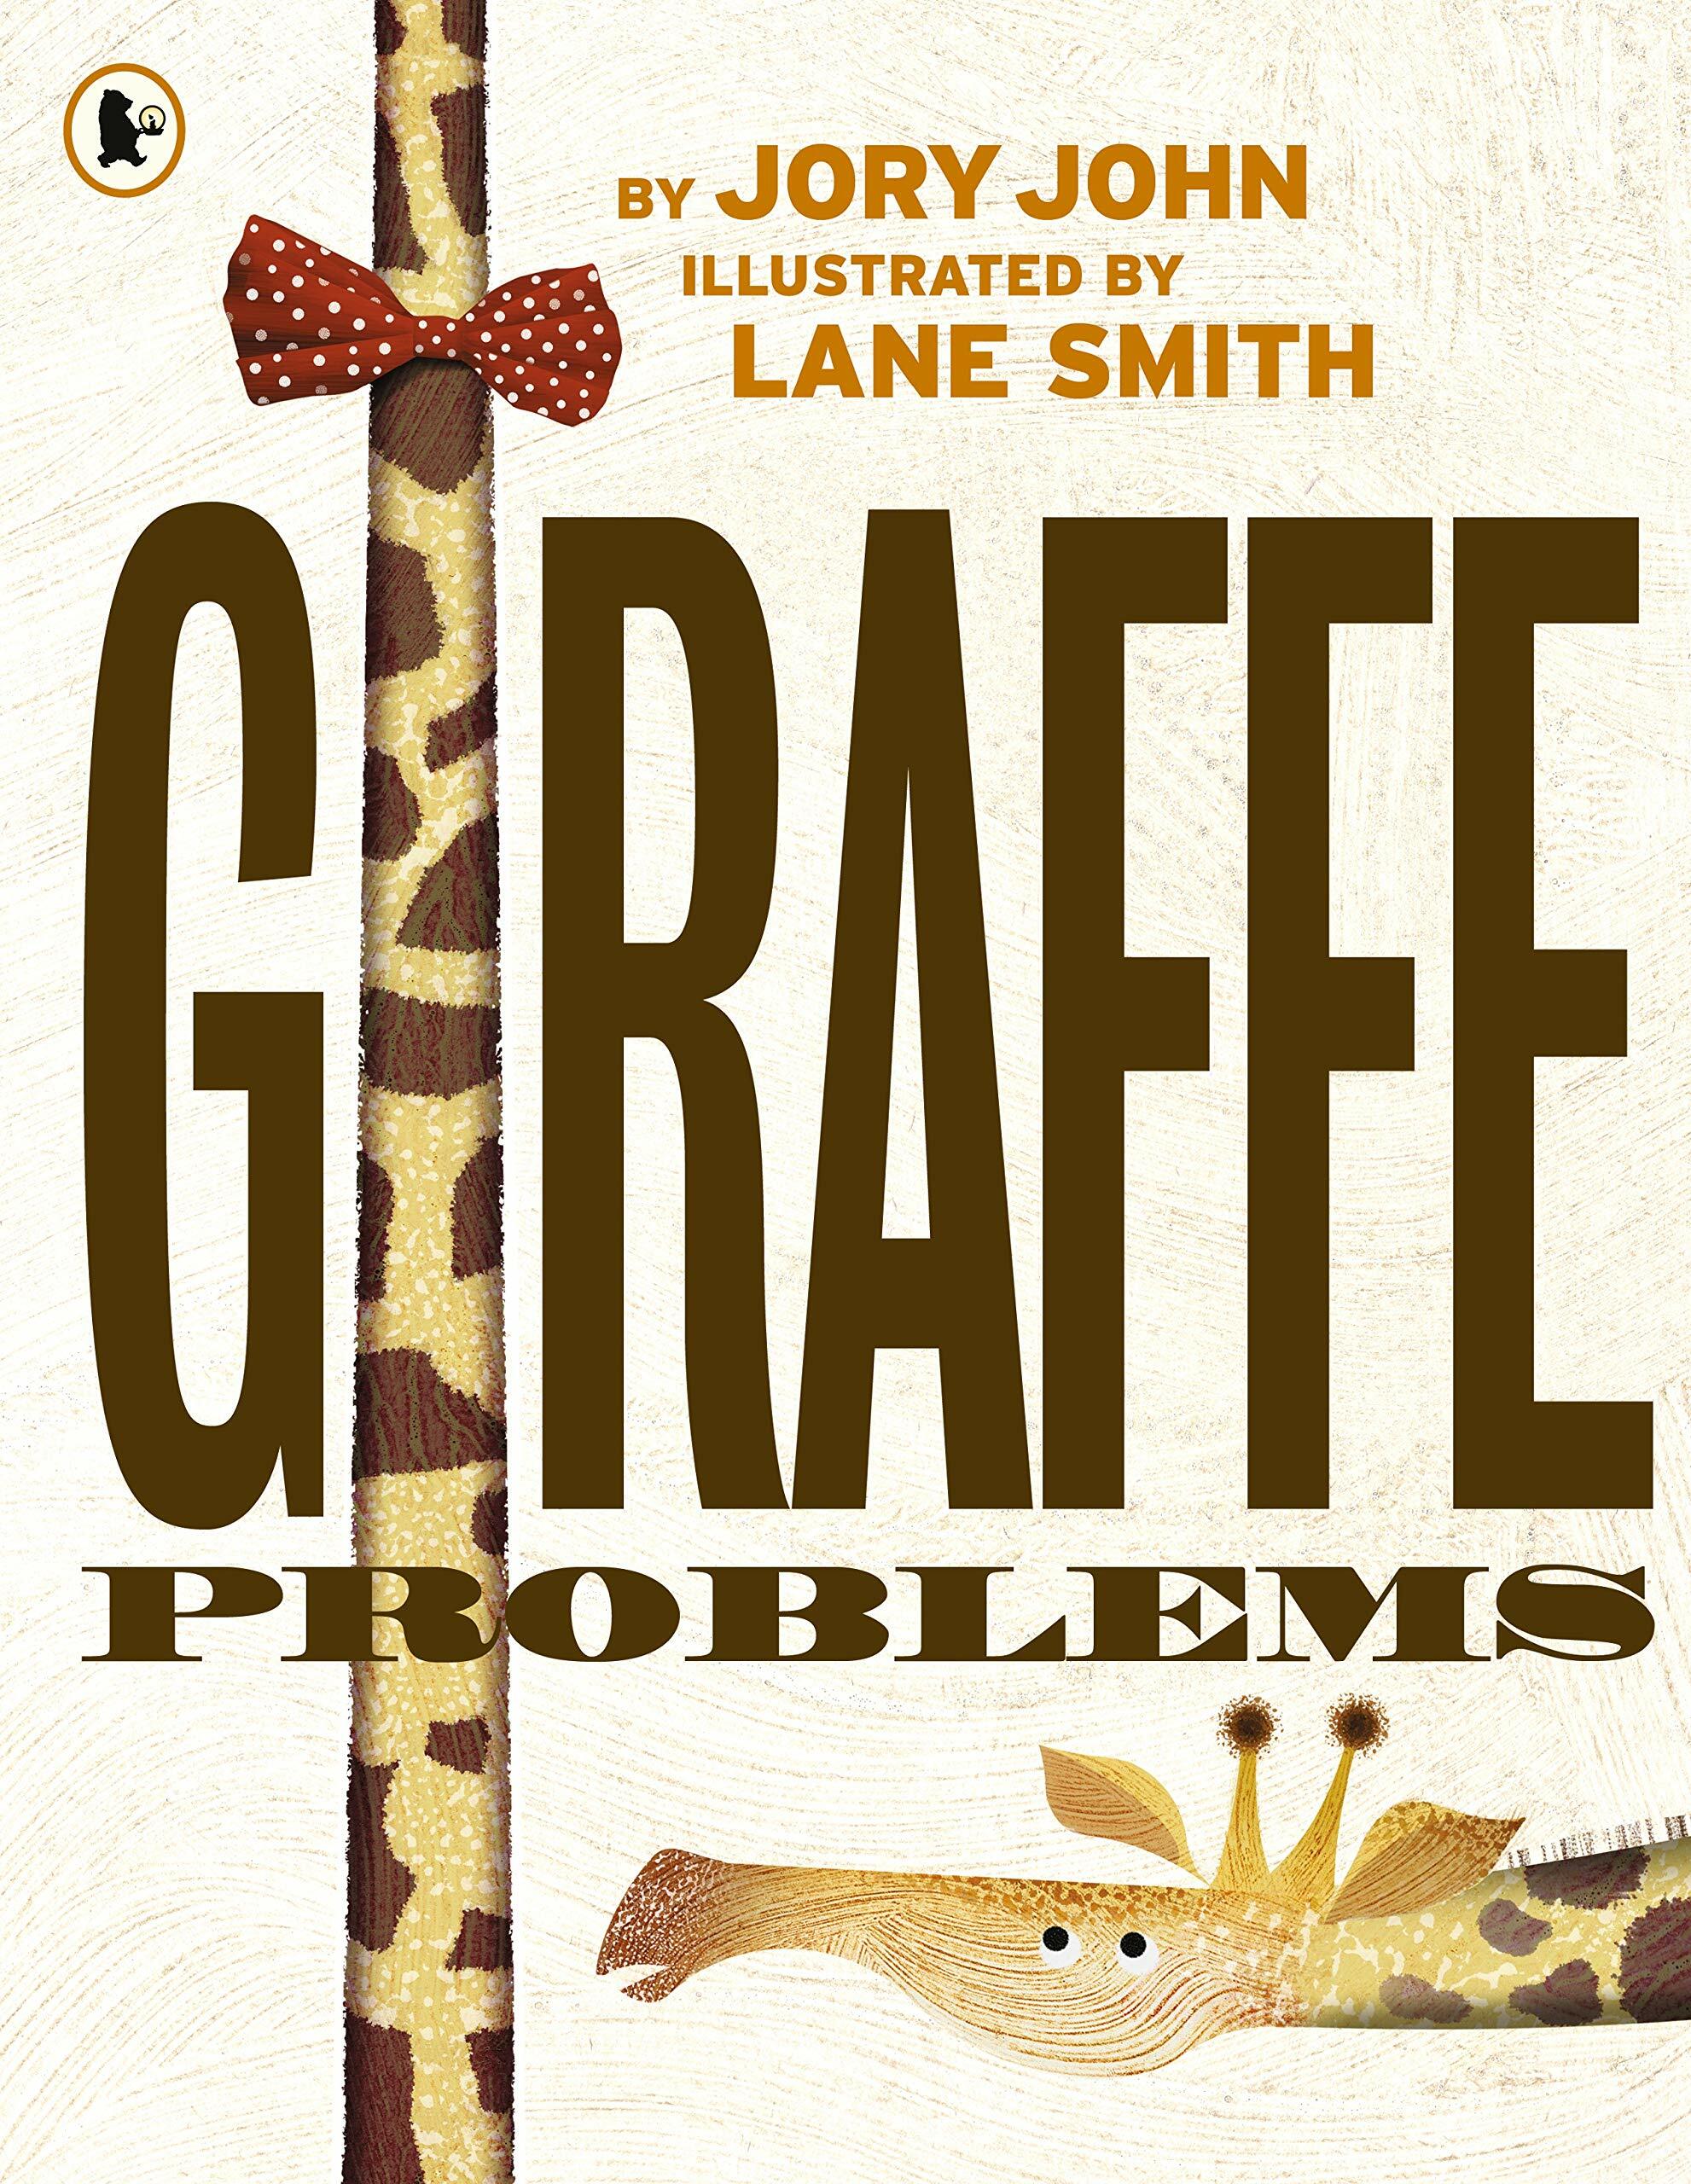 Giraffe Problems (Paperback)